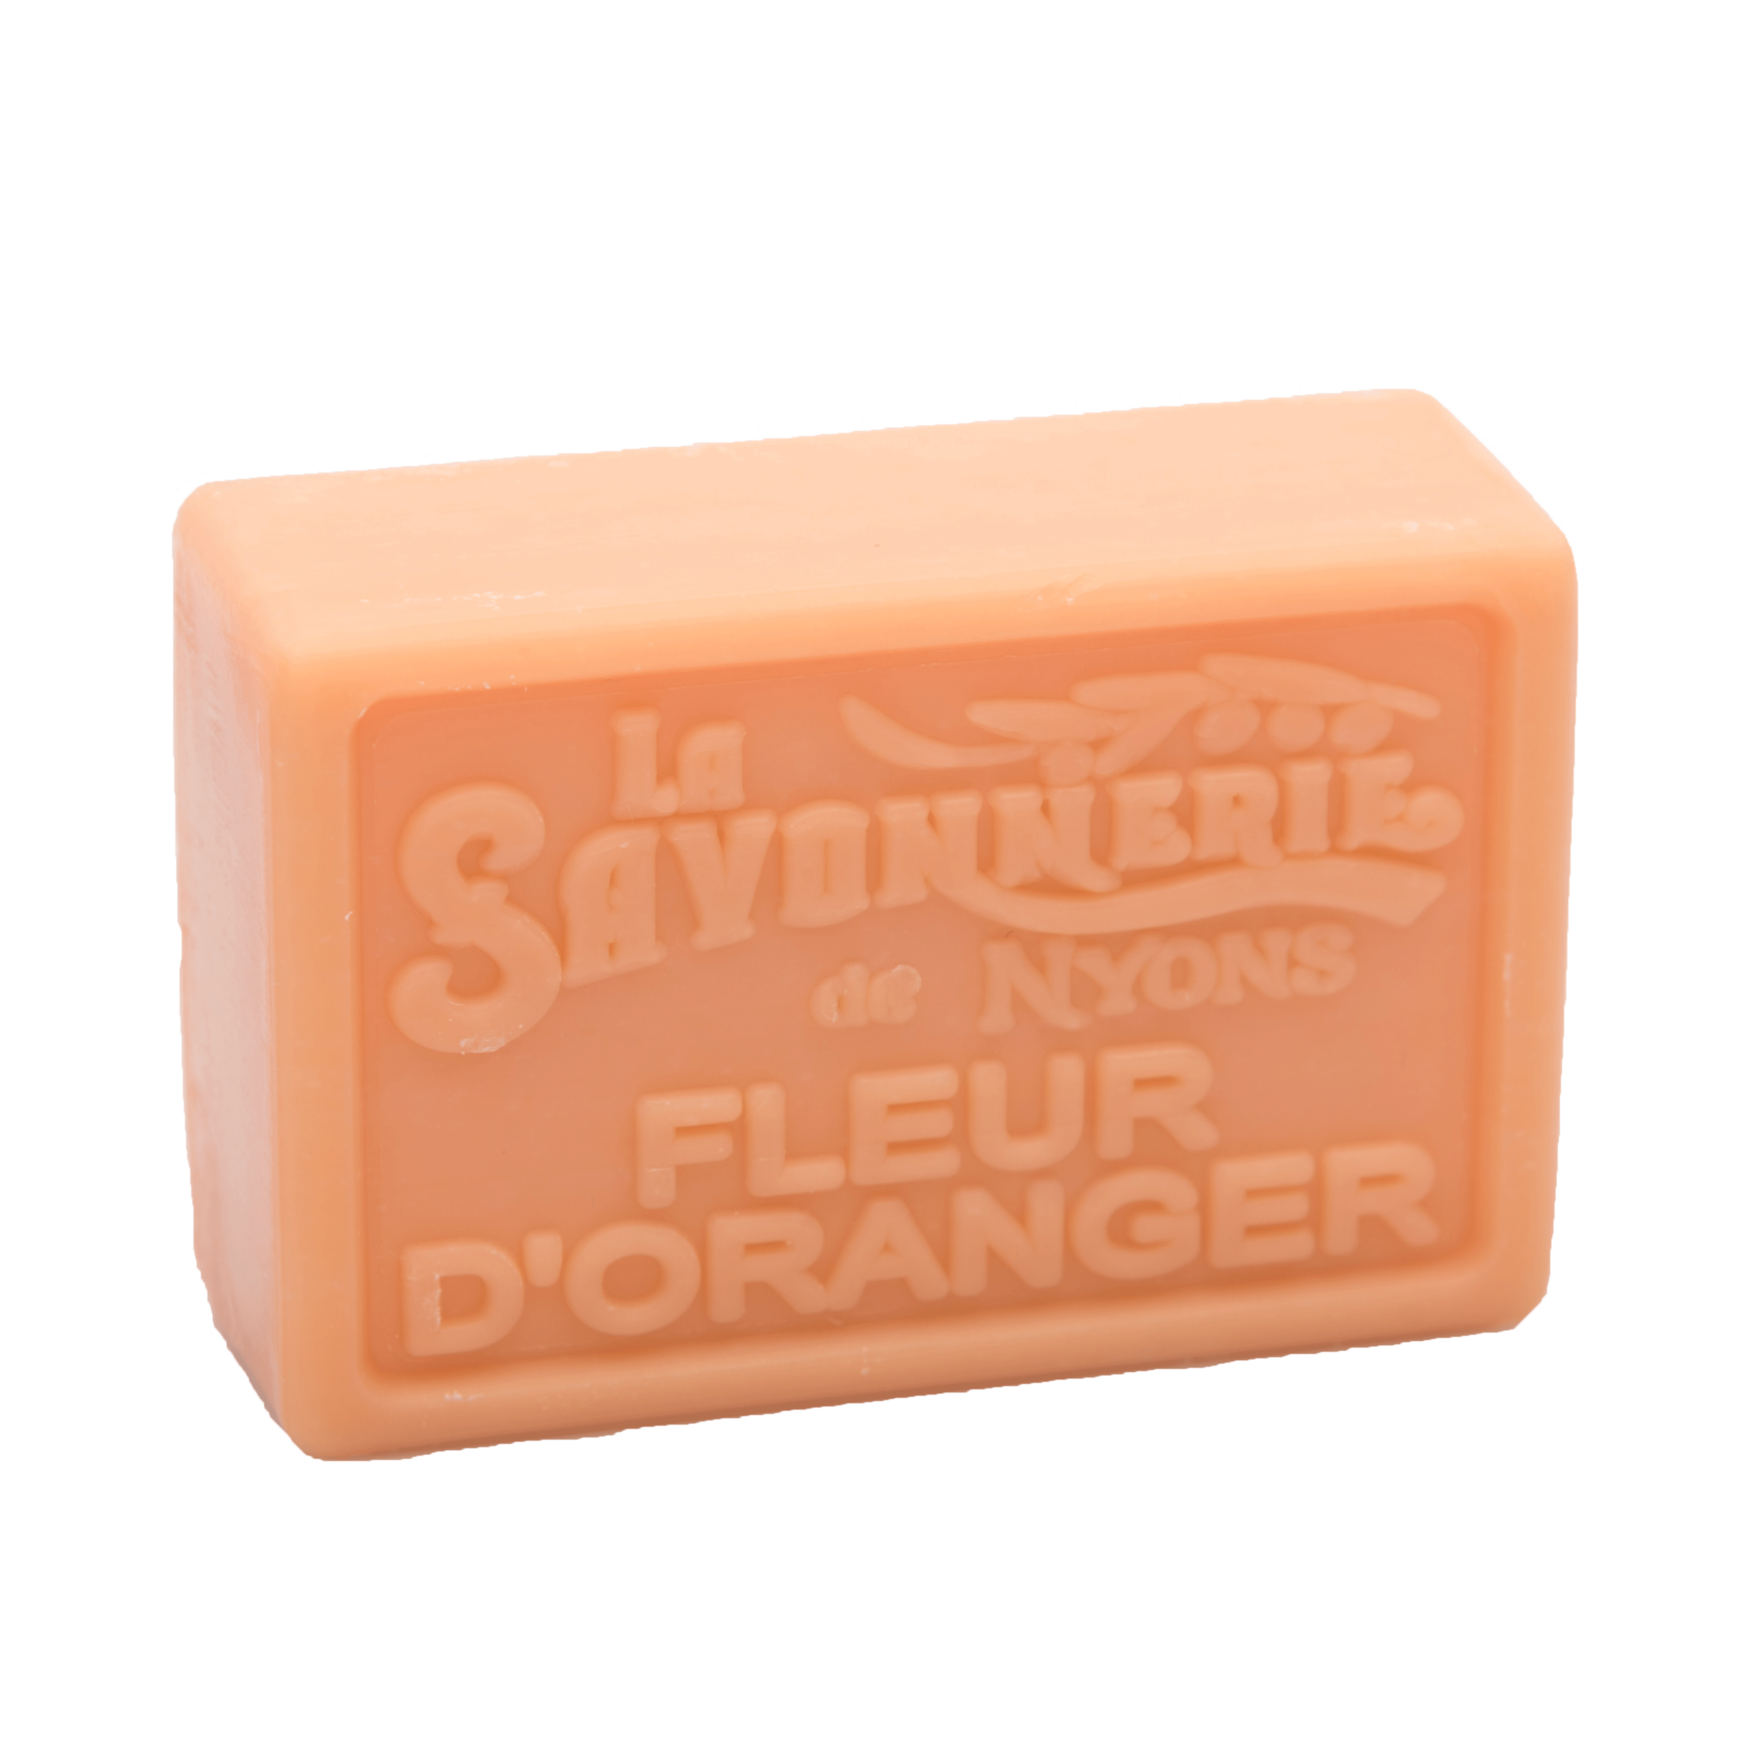 Orange bar of soap that readsLa Savonnerie de Nyons Fleur d'Oranger.